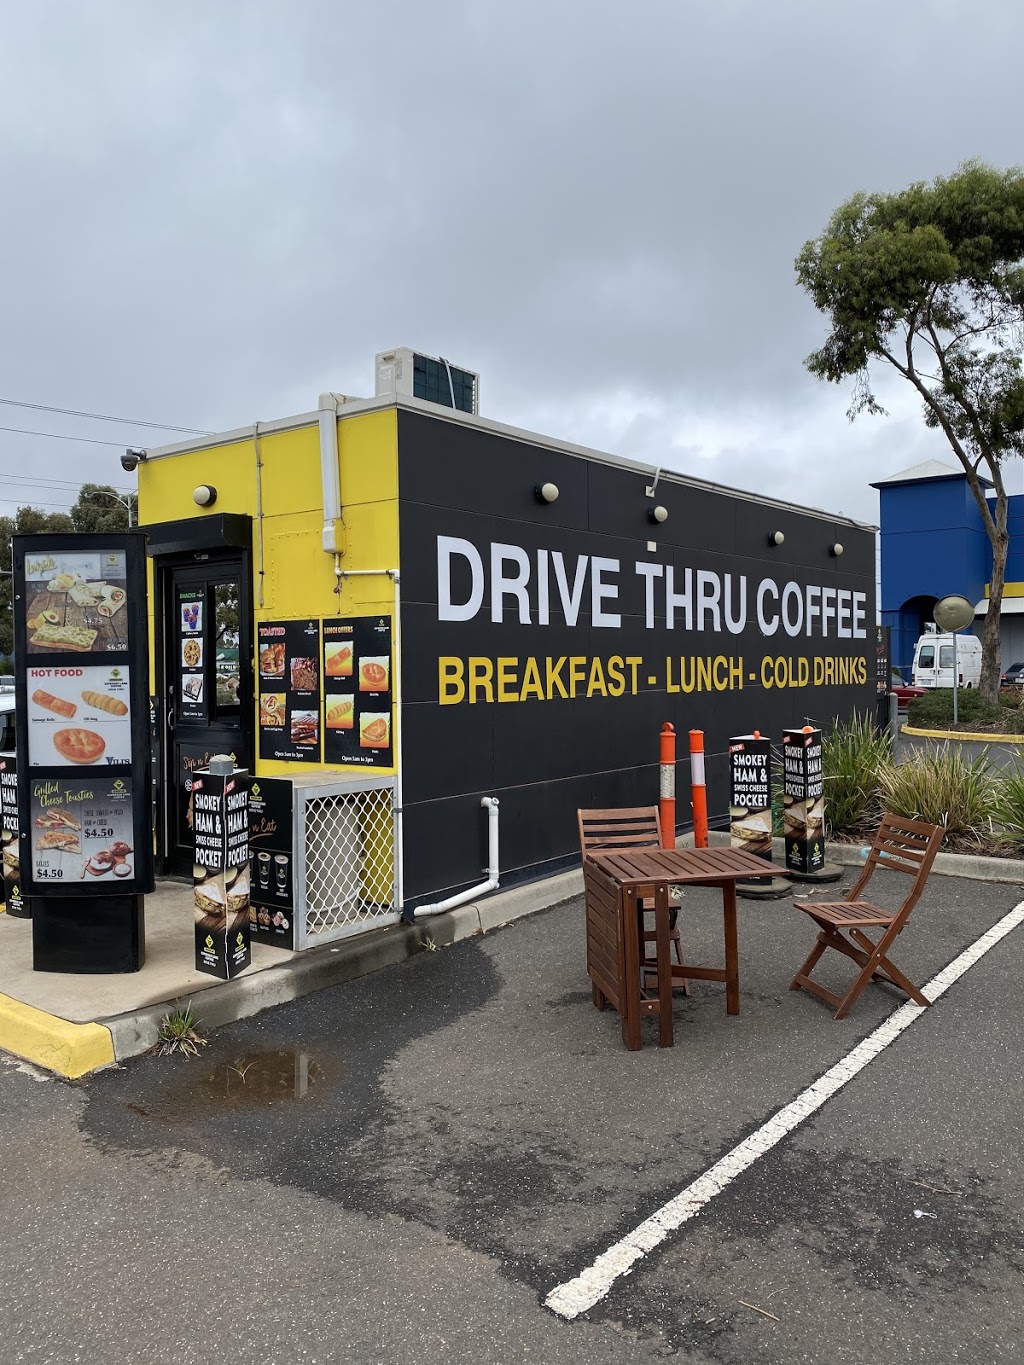 Espresso Lane Drive Thru Hopper Crossing | 201-219 Old Geelong Rd, Hoppers Crossing VIC 3029, Australia | Phone: 0438 050 930